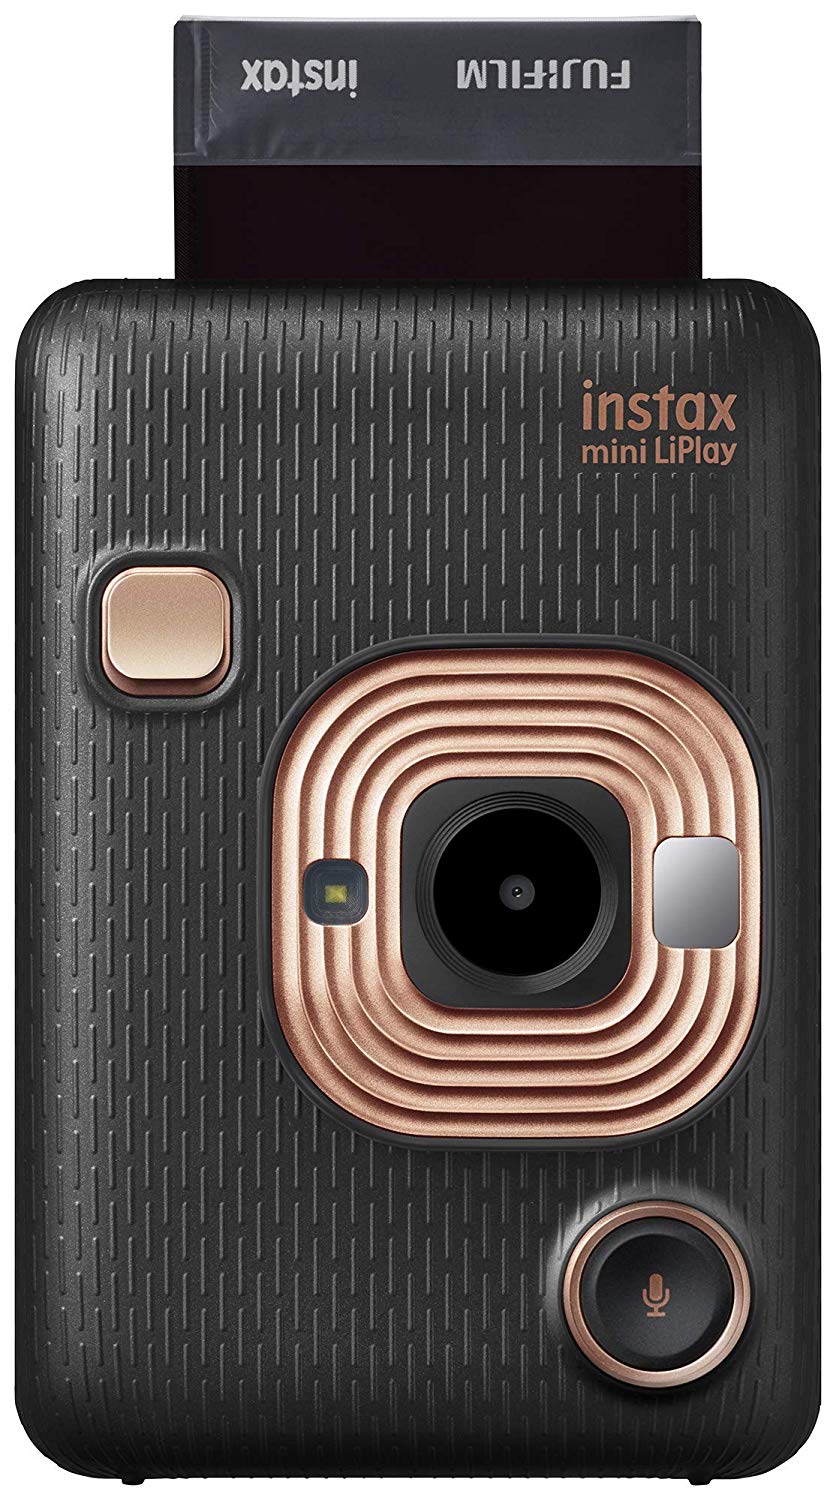 Instax Mini Hybrid Instant Camera